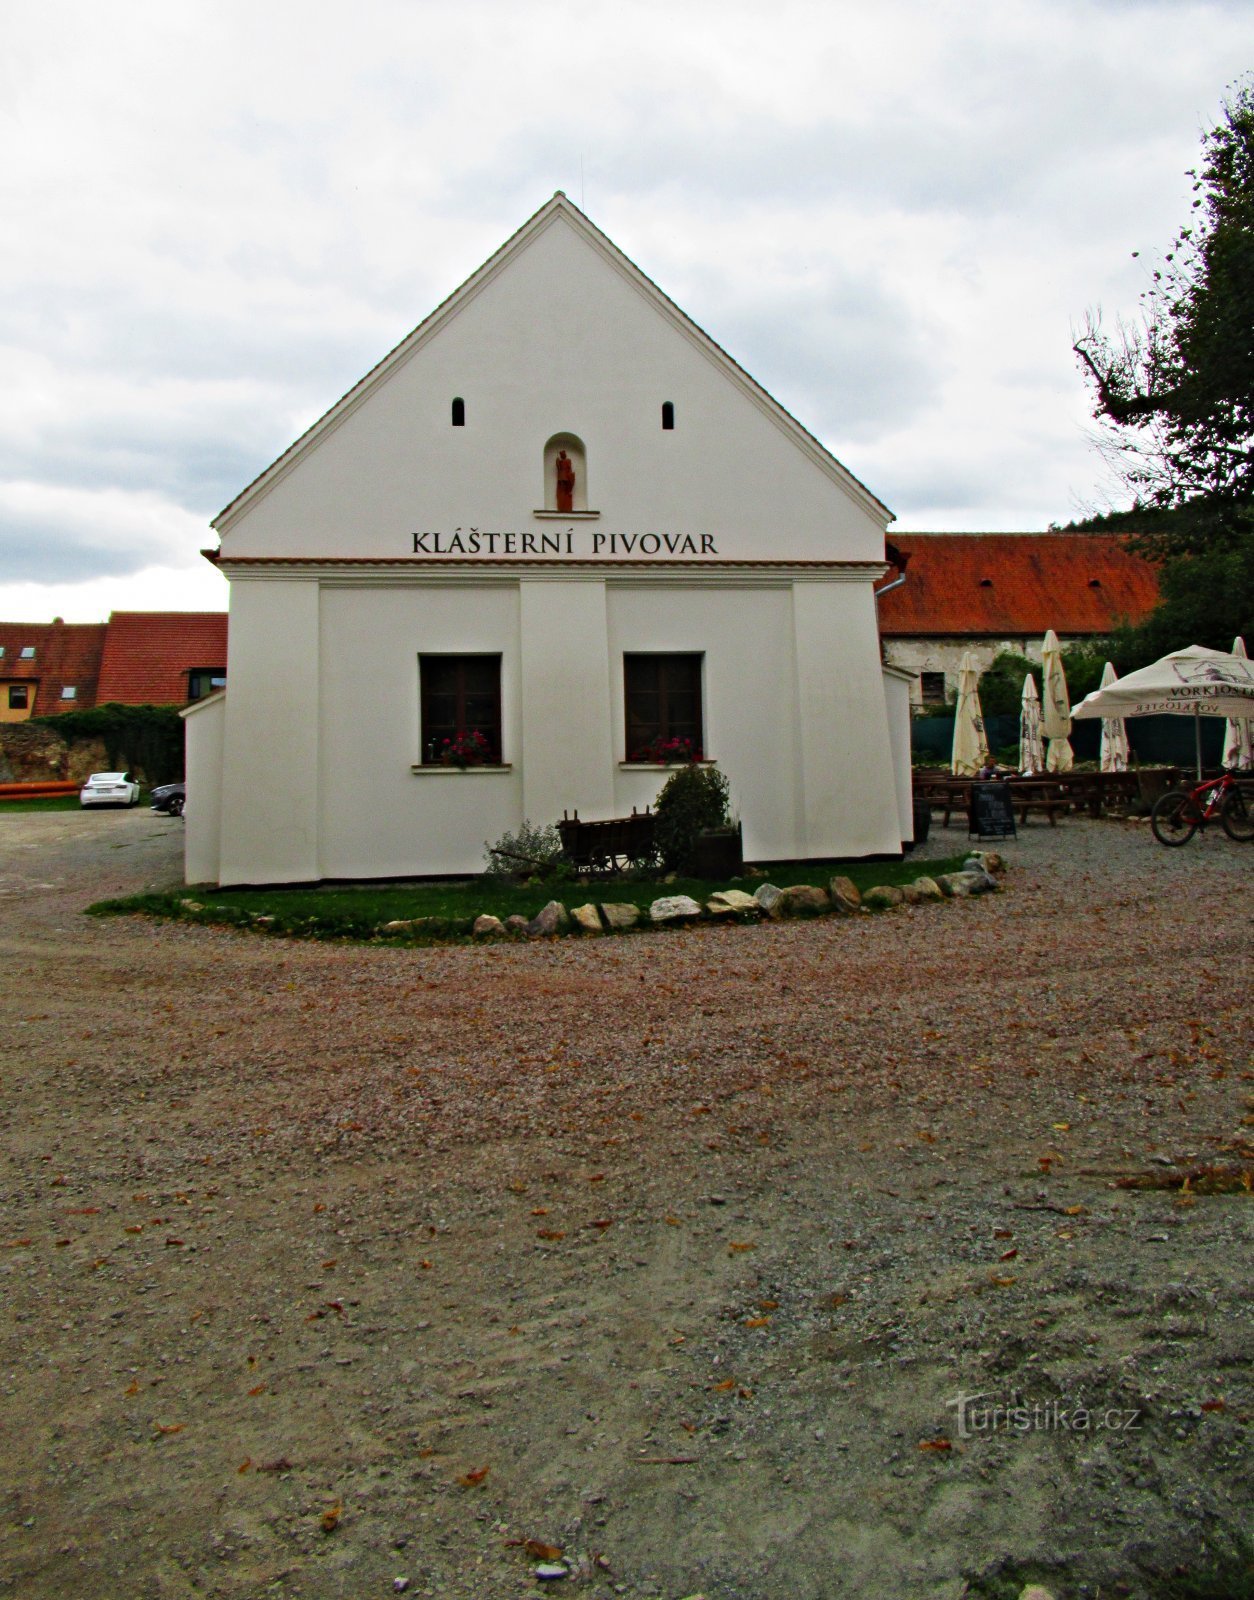 Et lille familiebryggeri i Předklášteří nær Tišnov